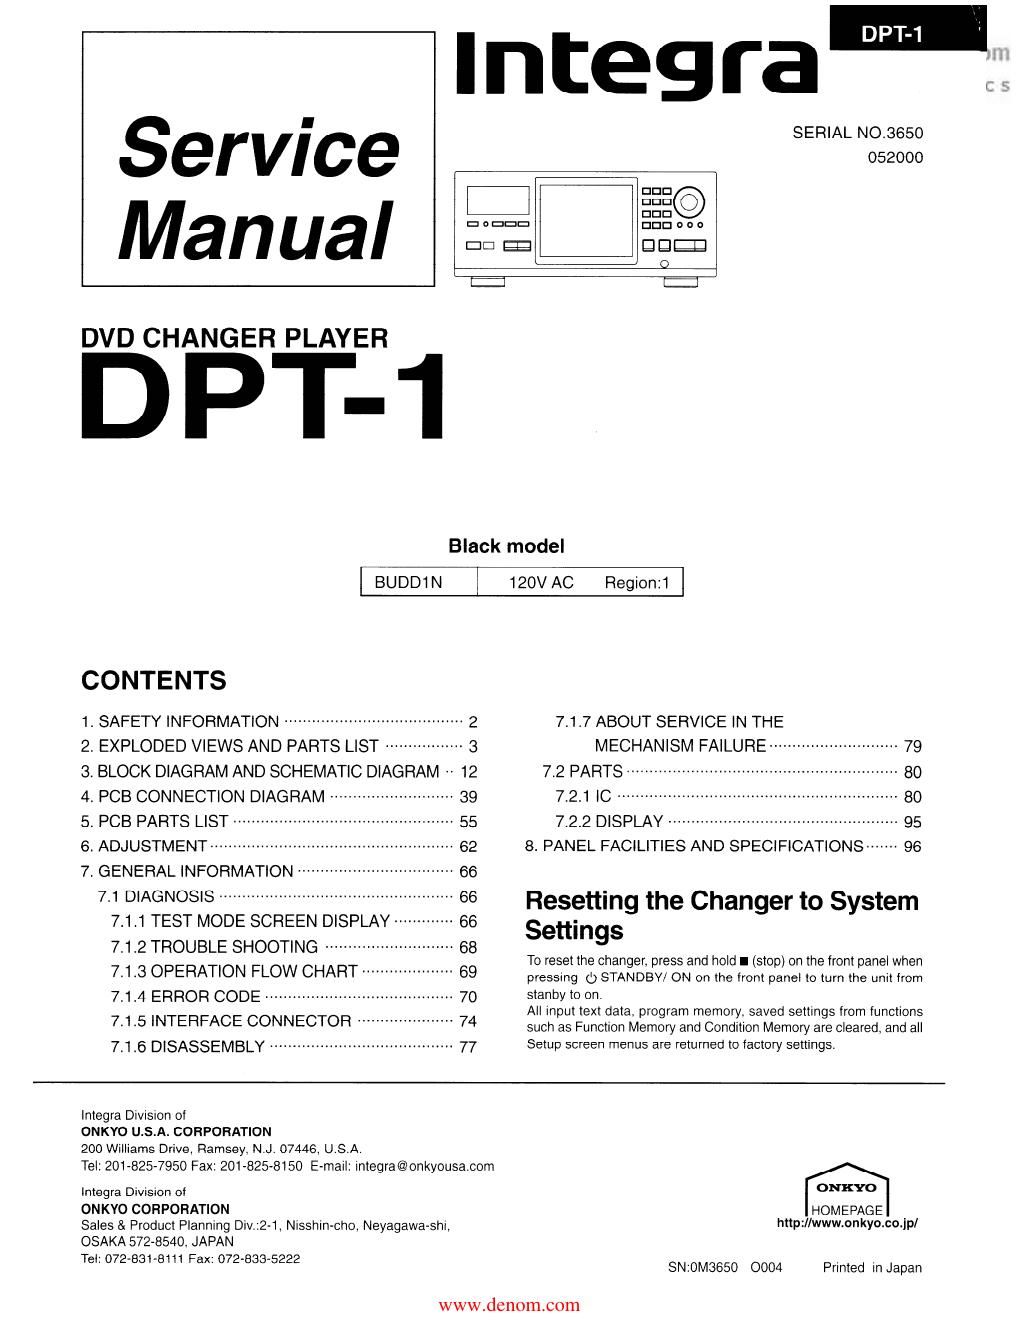 integra dpt 1 service manual